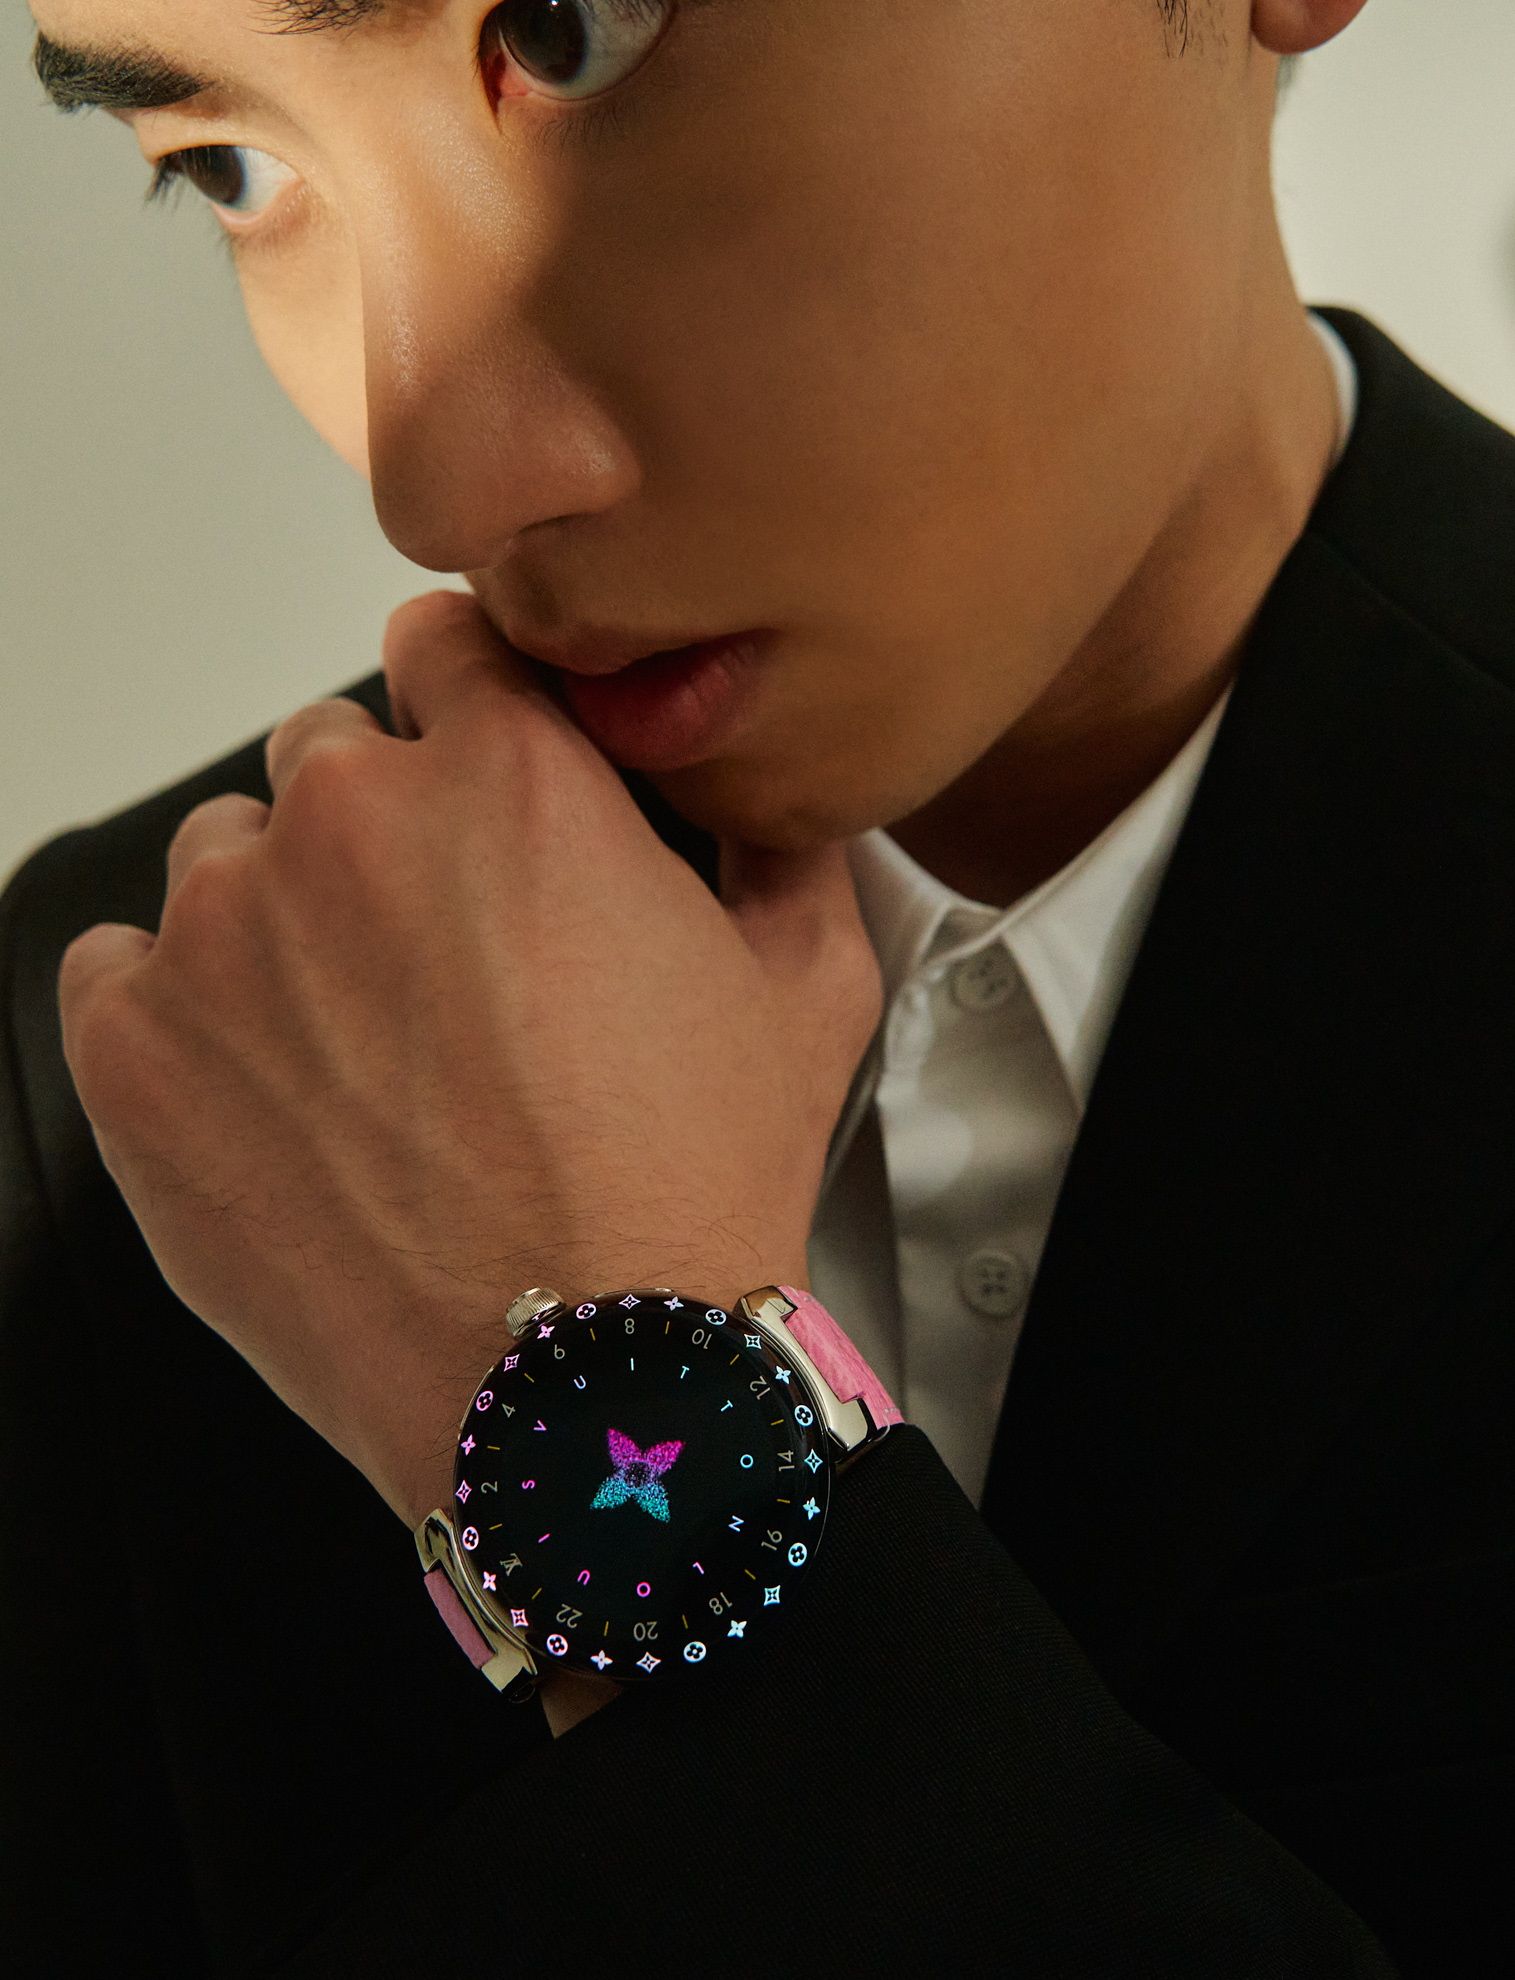 Louis Vuitton Introduces the Tambour Horizon Smartwatch